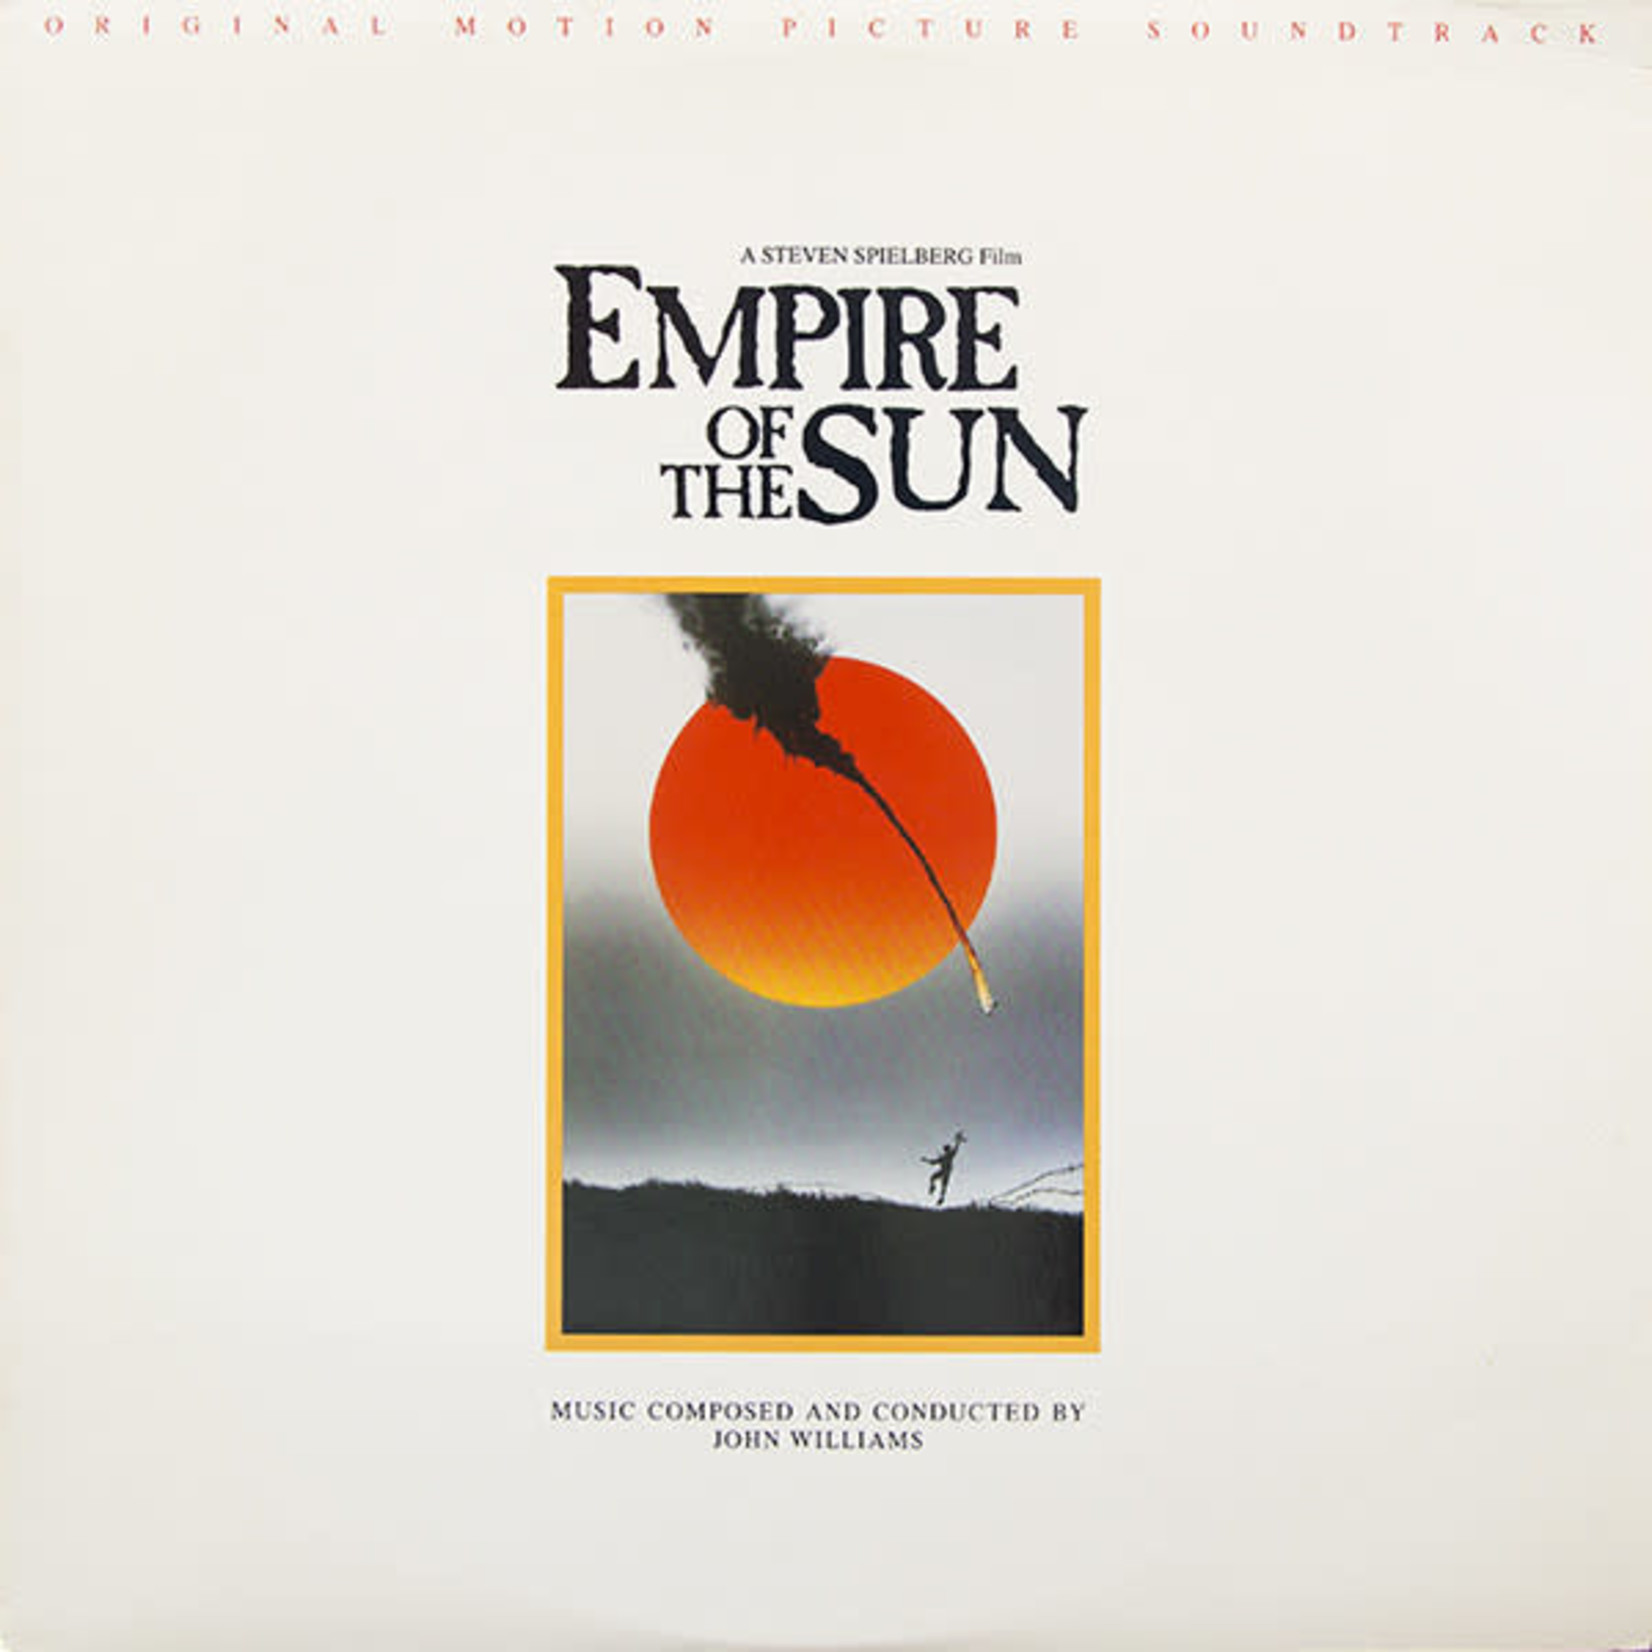 [Vintage] John Williams - Empire of the Sun (soundtrack)